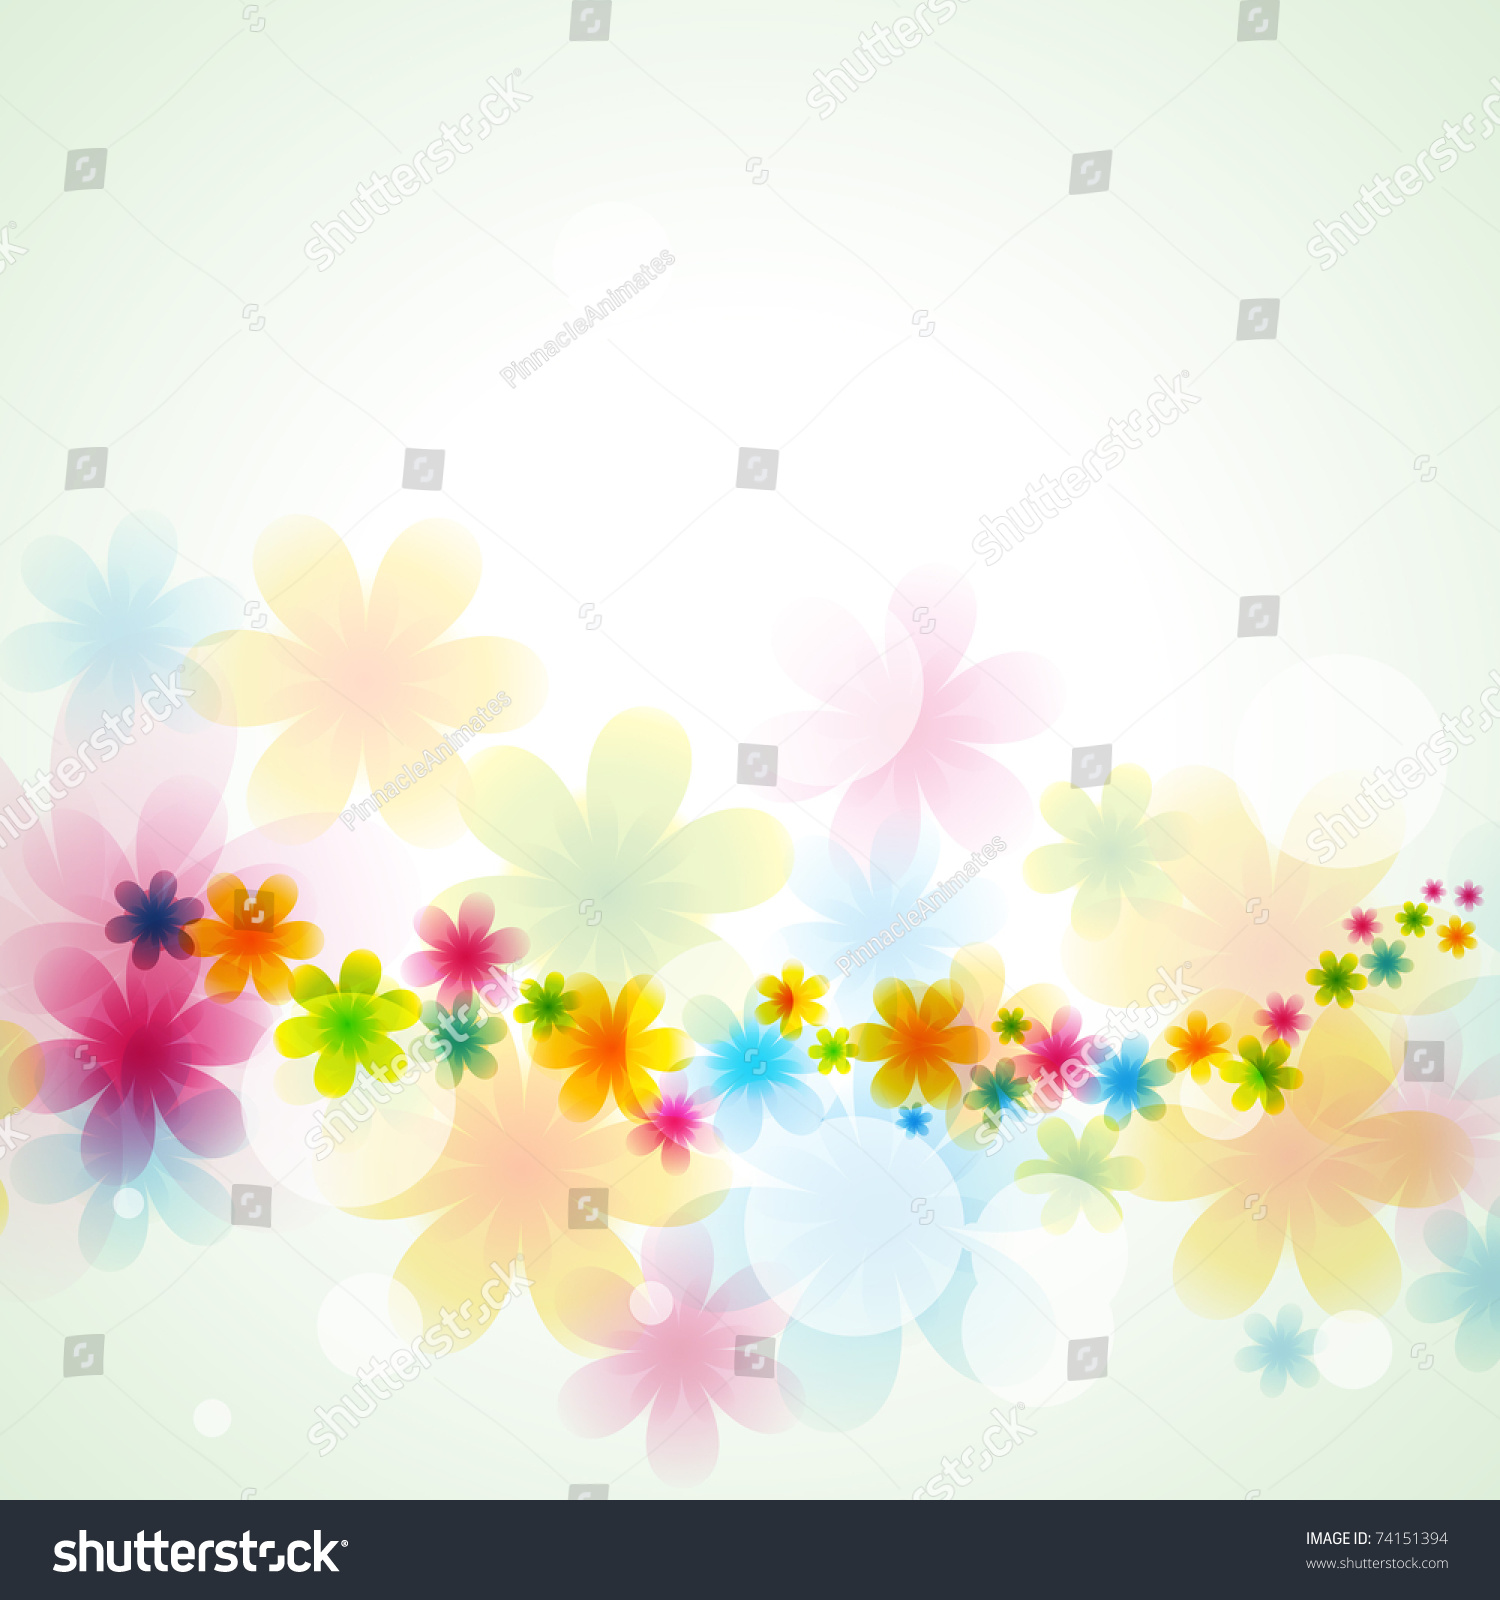 Beautiful Flower Vector Background Illustration - 74151394 ...